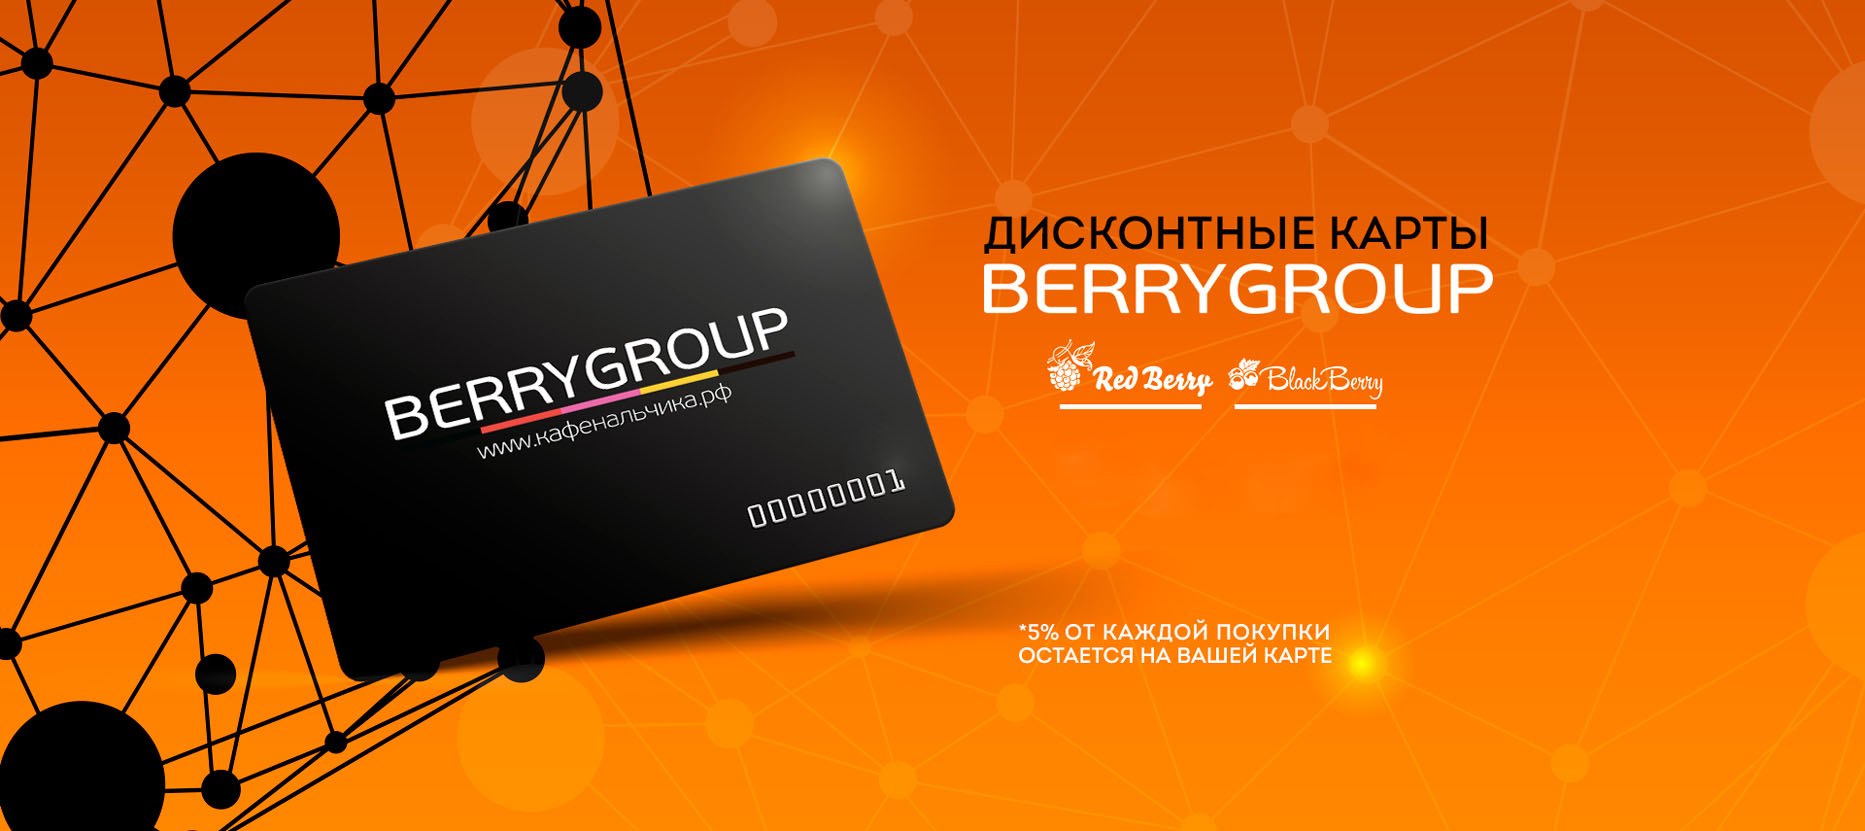 Berry Group Нальчик Официальный сайт